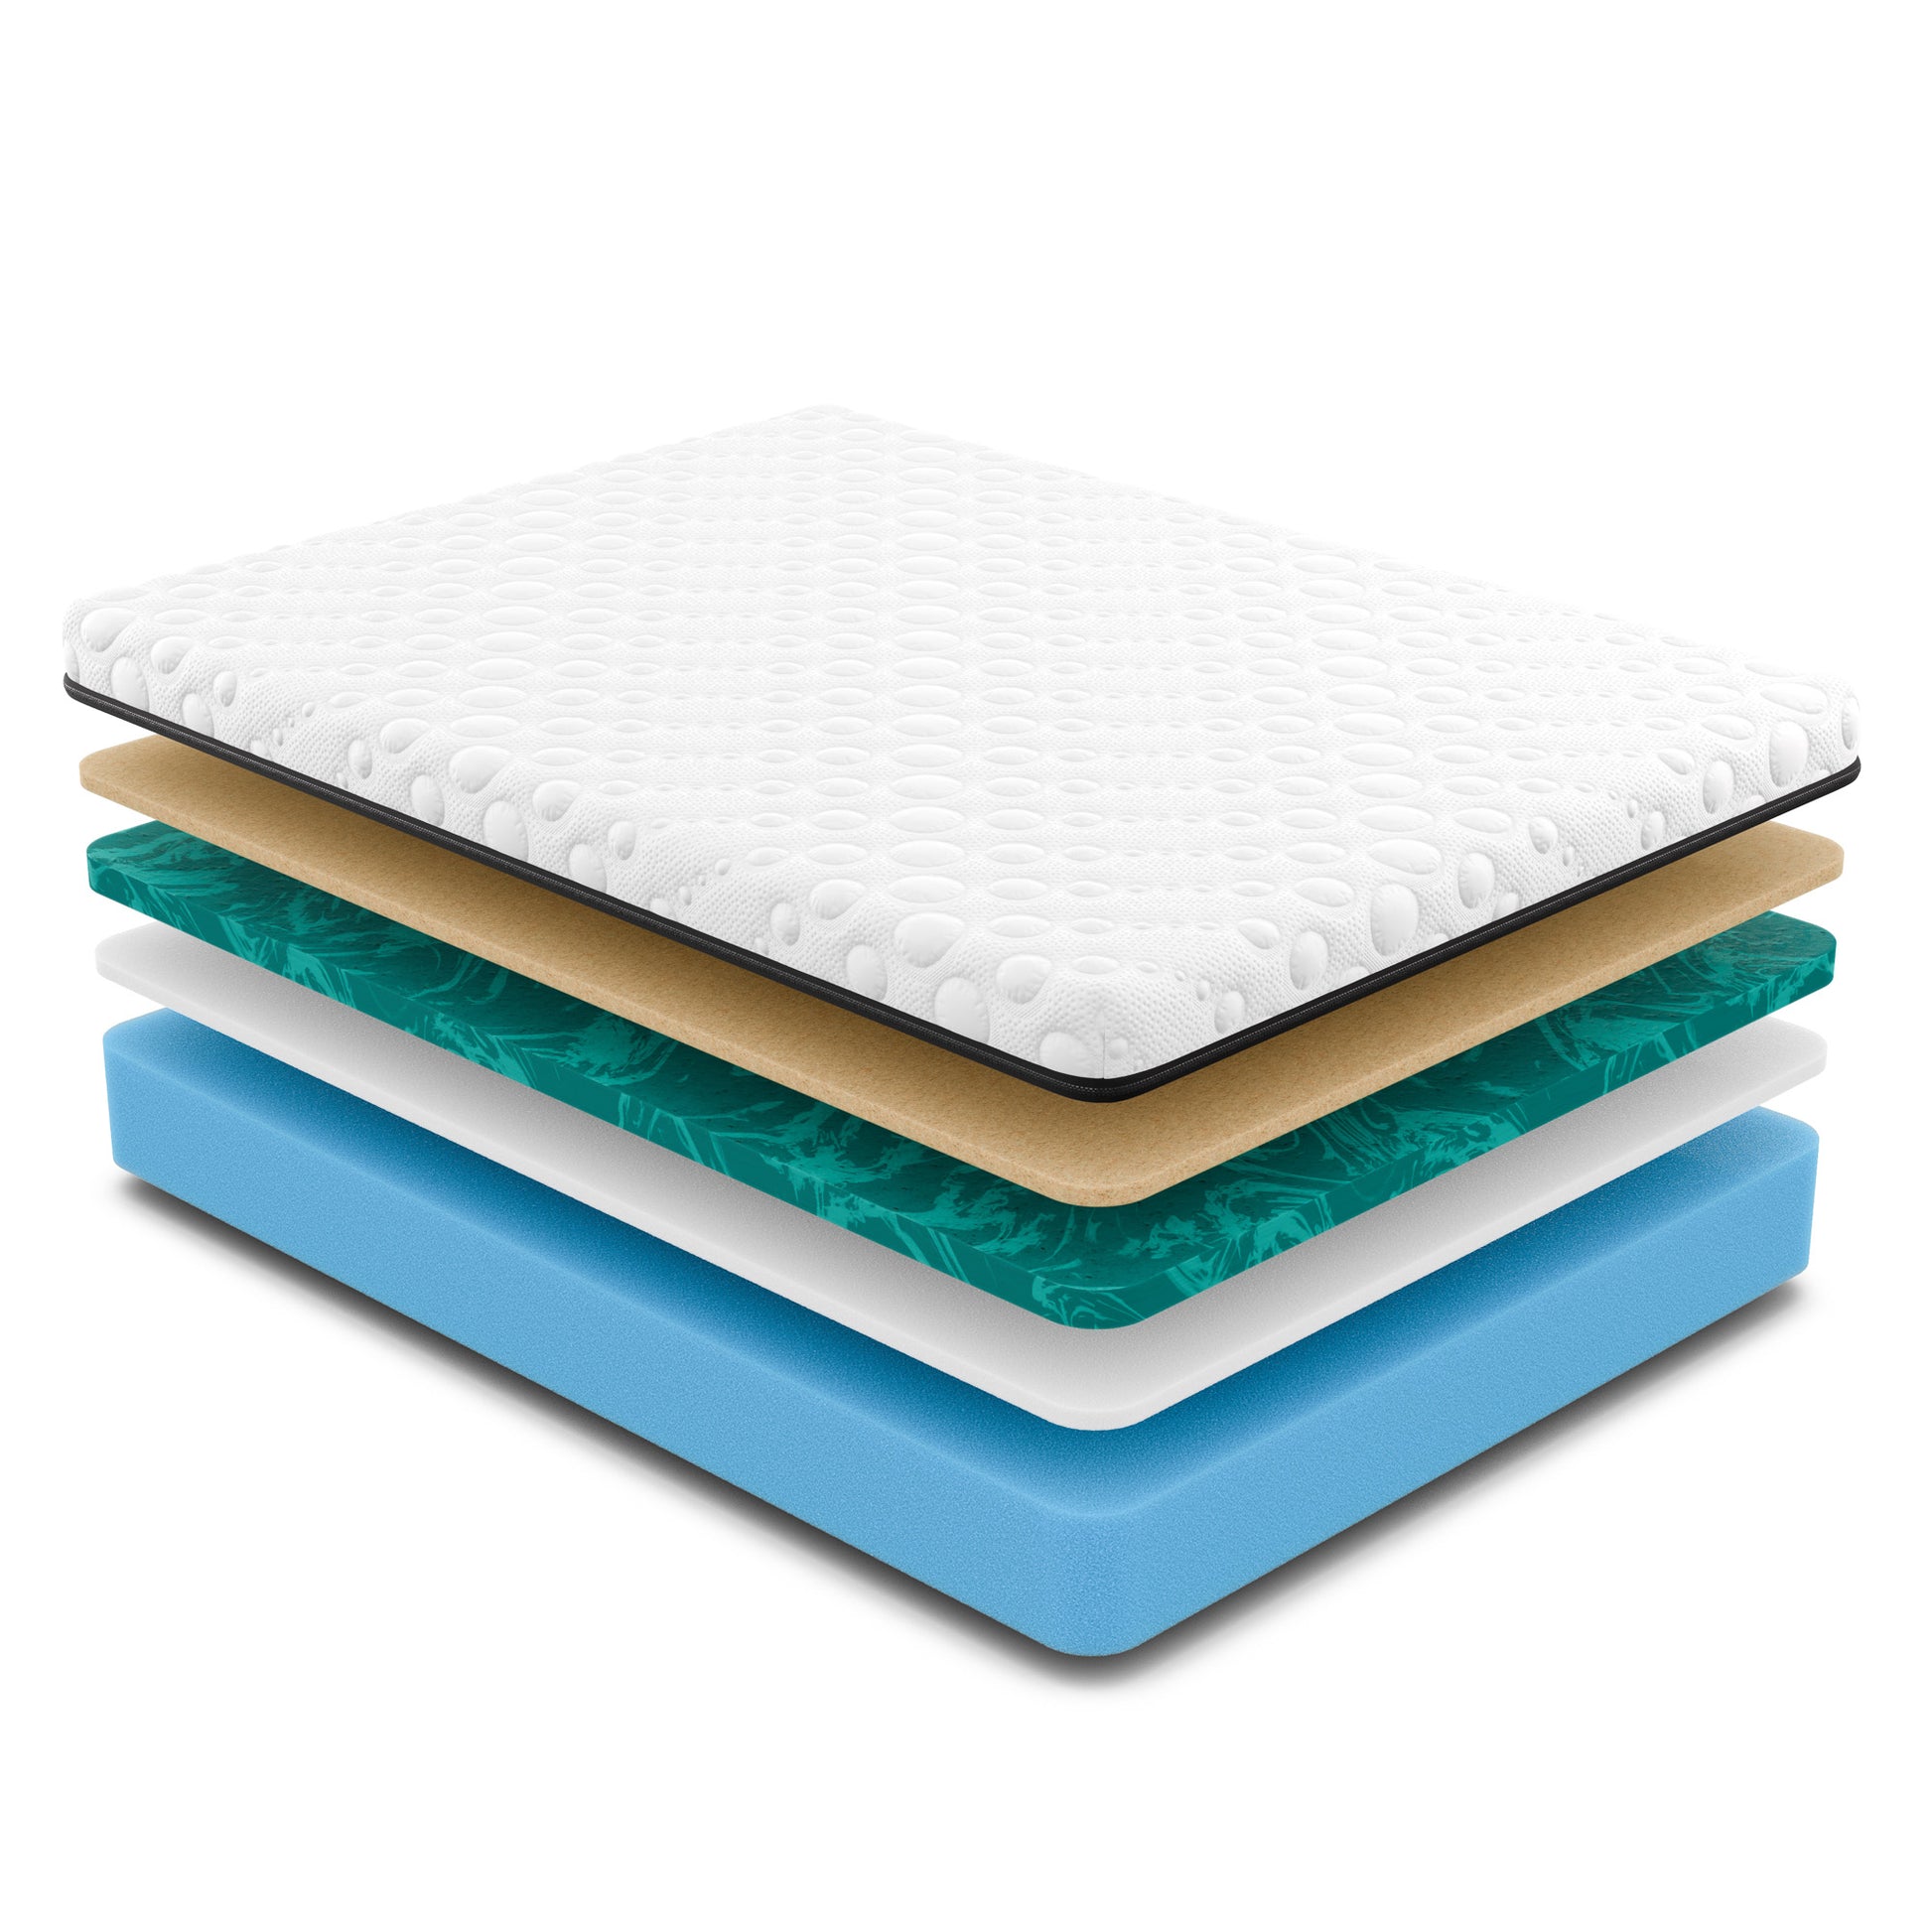 Yogabed® Cool Gel Memory Foam Mattress